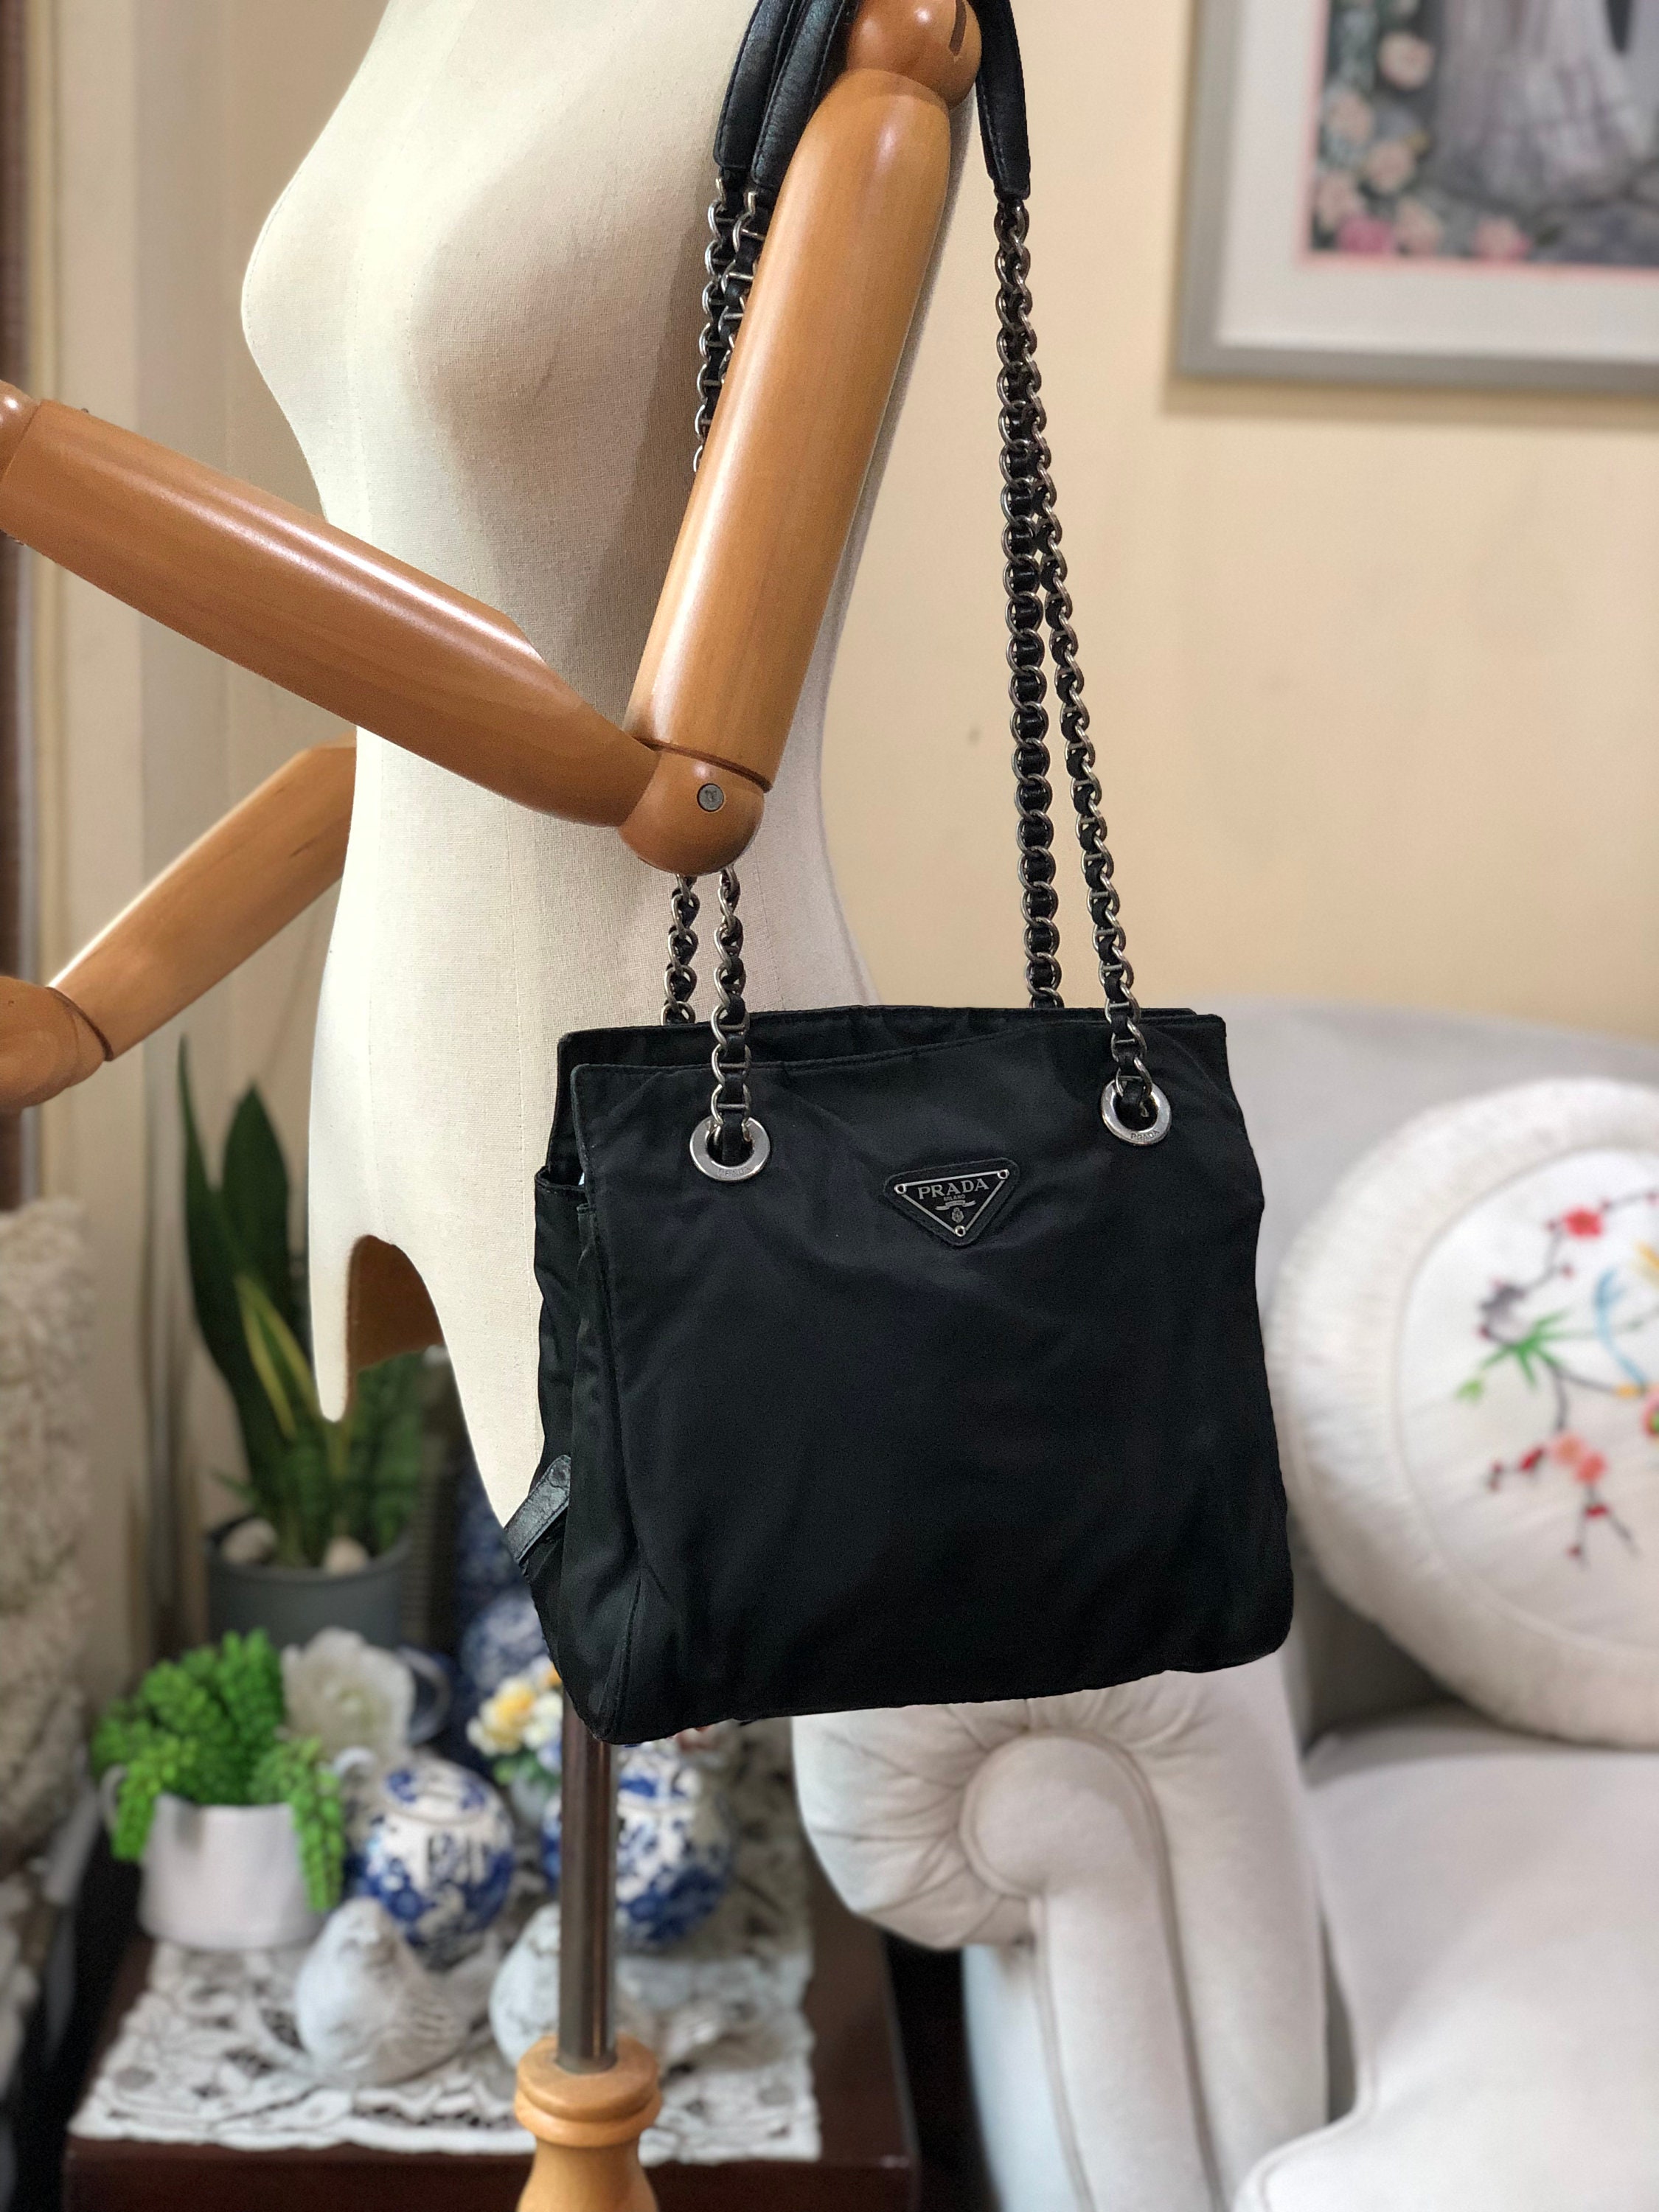 Prada Black Nylon Tote Bag-Authentic With Fabric Strap And Zipper Closure